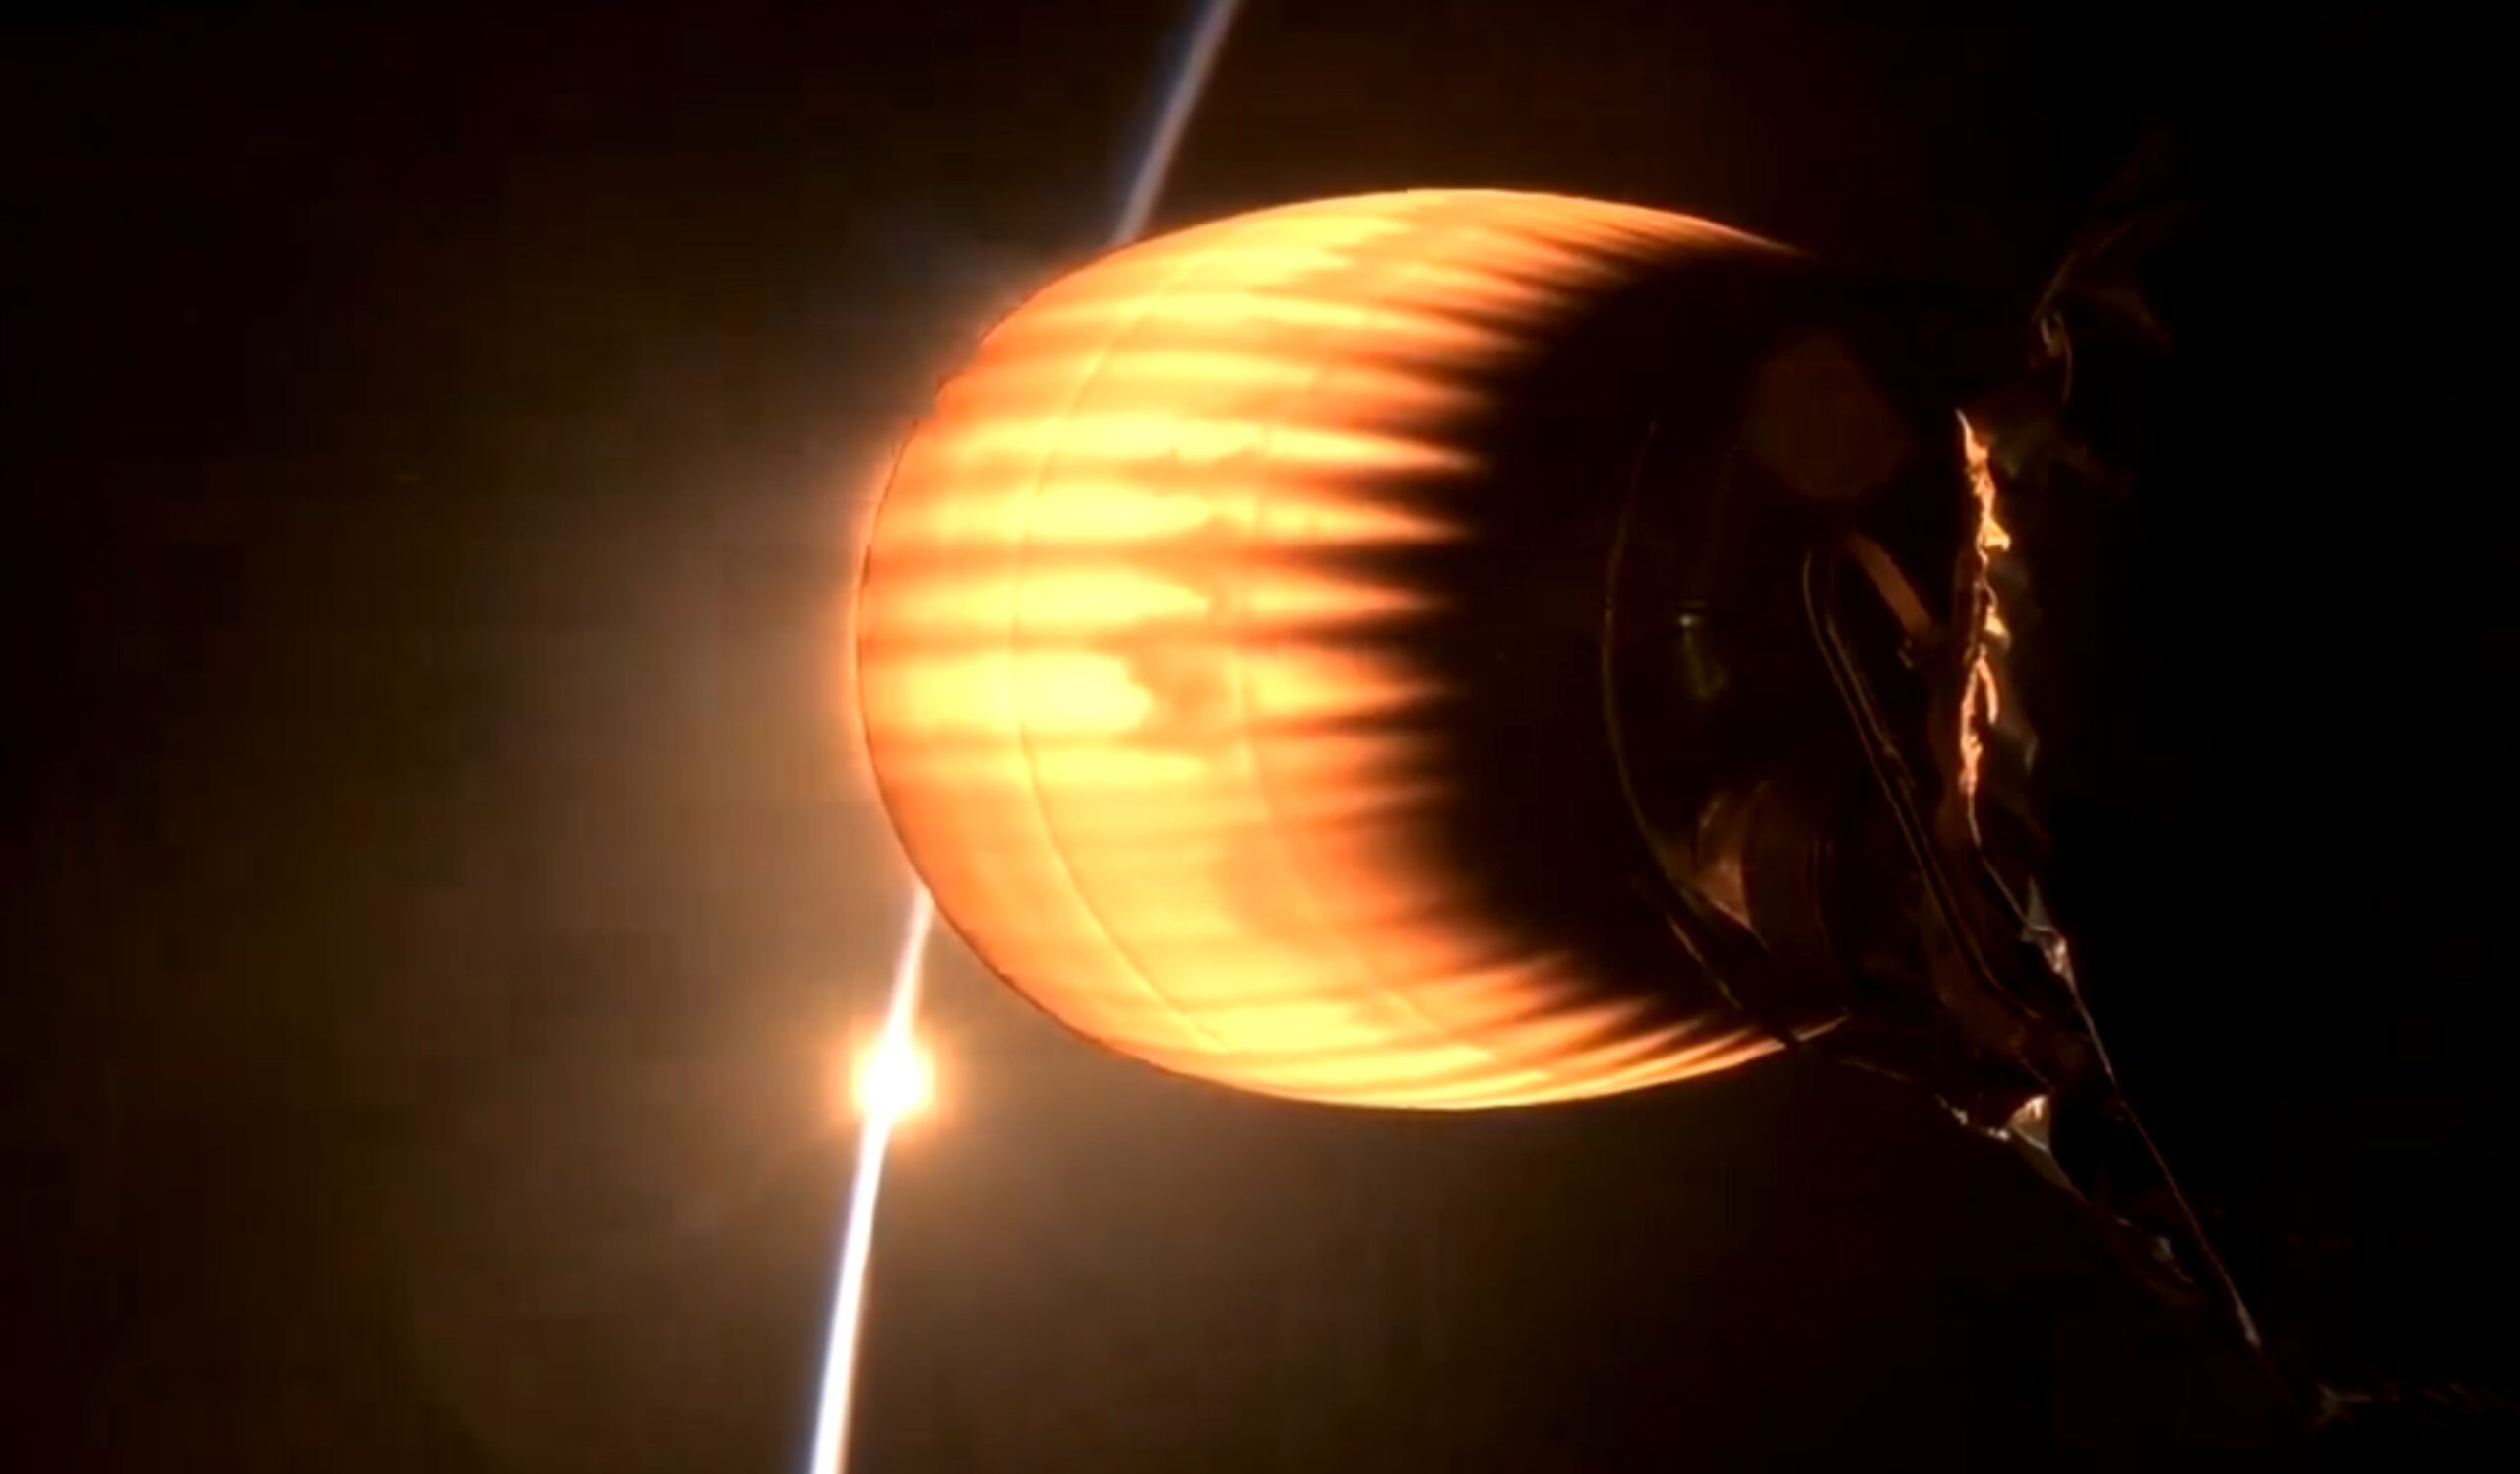 SpaceX показали полет Falcon 9 на фоне заката Солнца